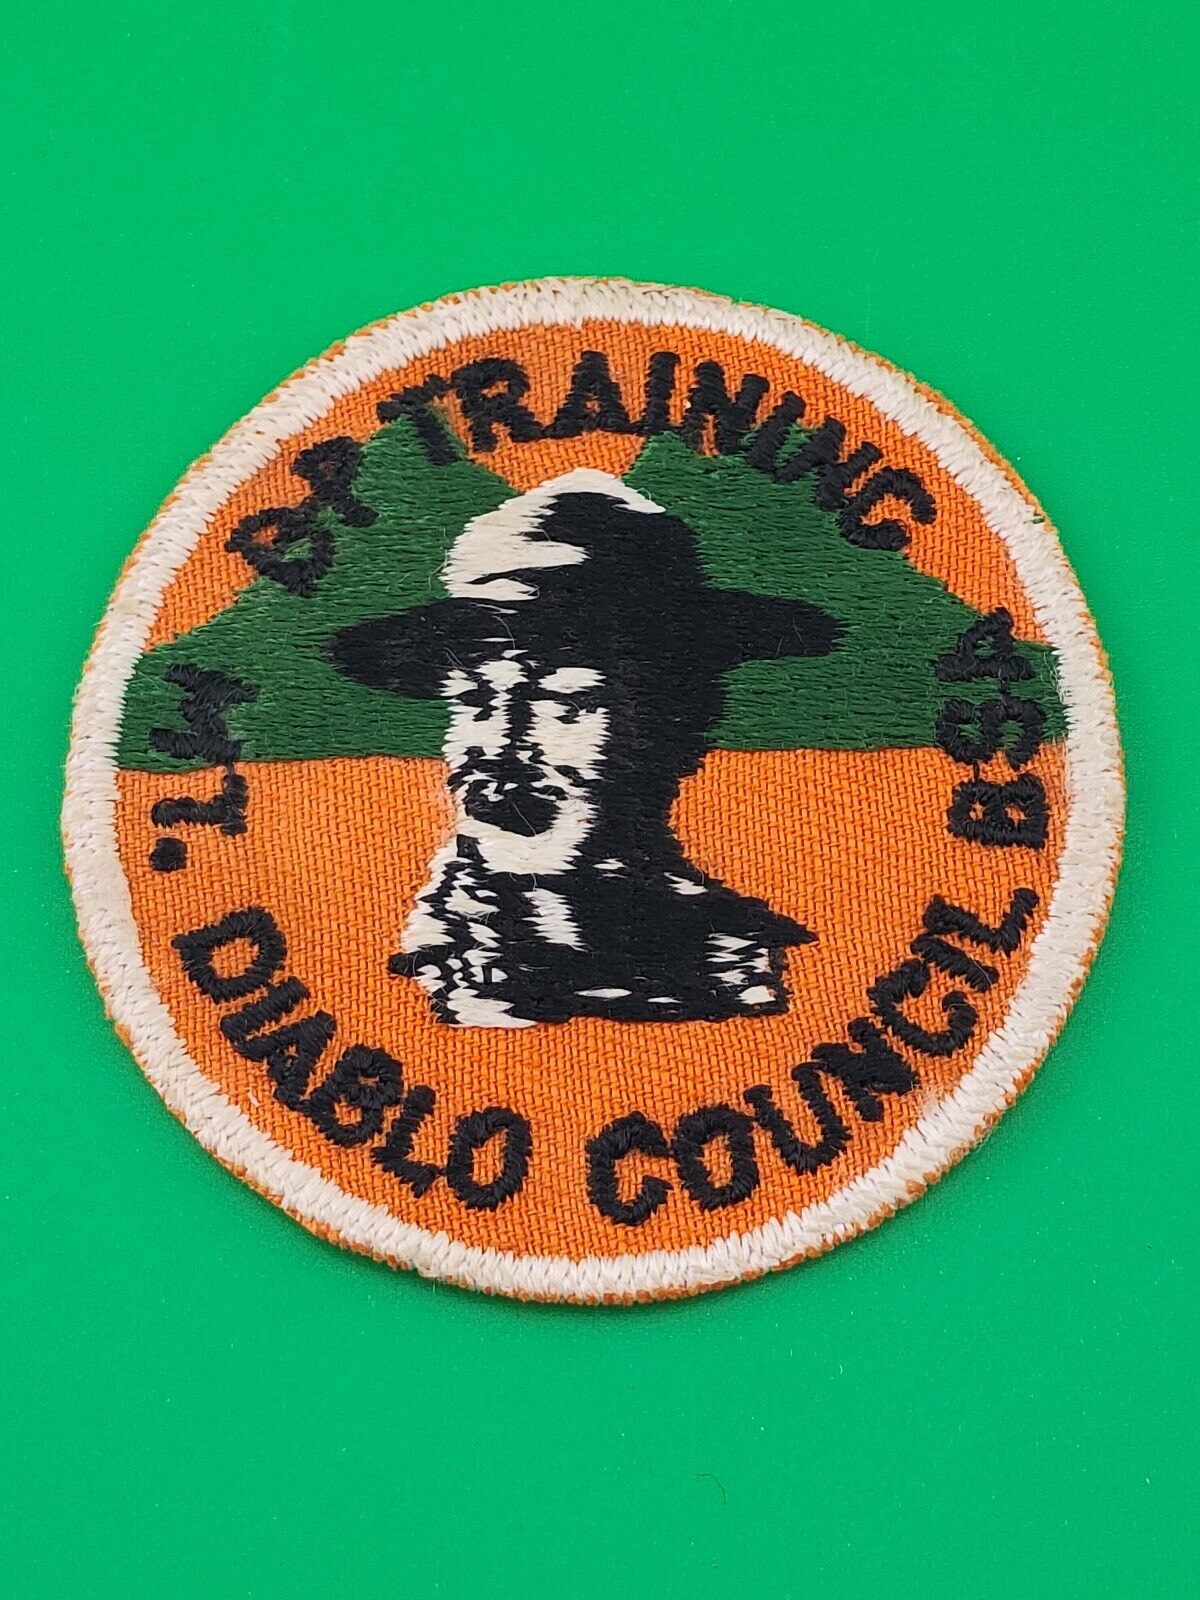 B-P Training Mt, Diablo Council Patch BSA Boy Scouts Of America NEW